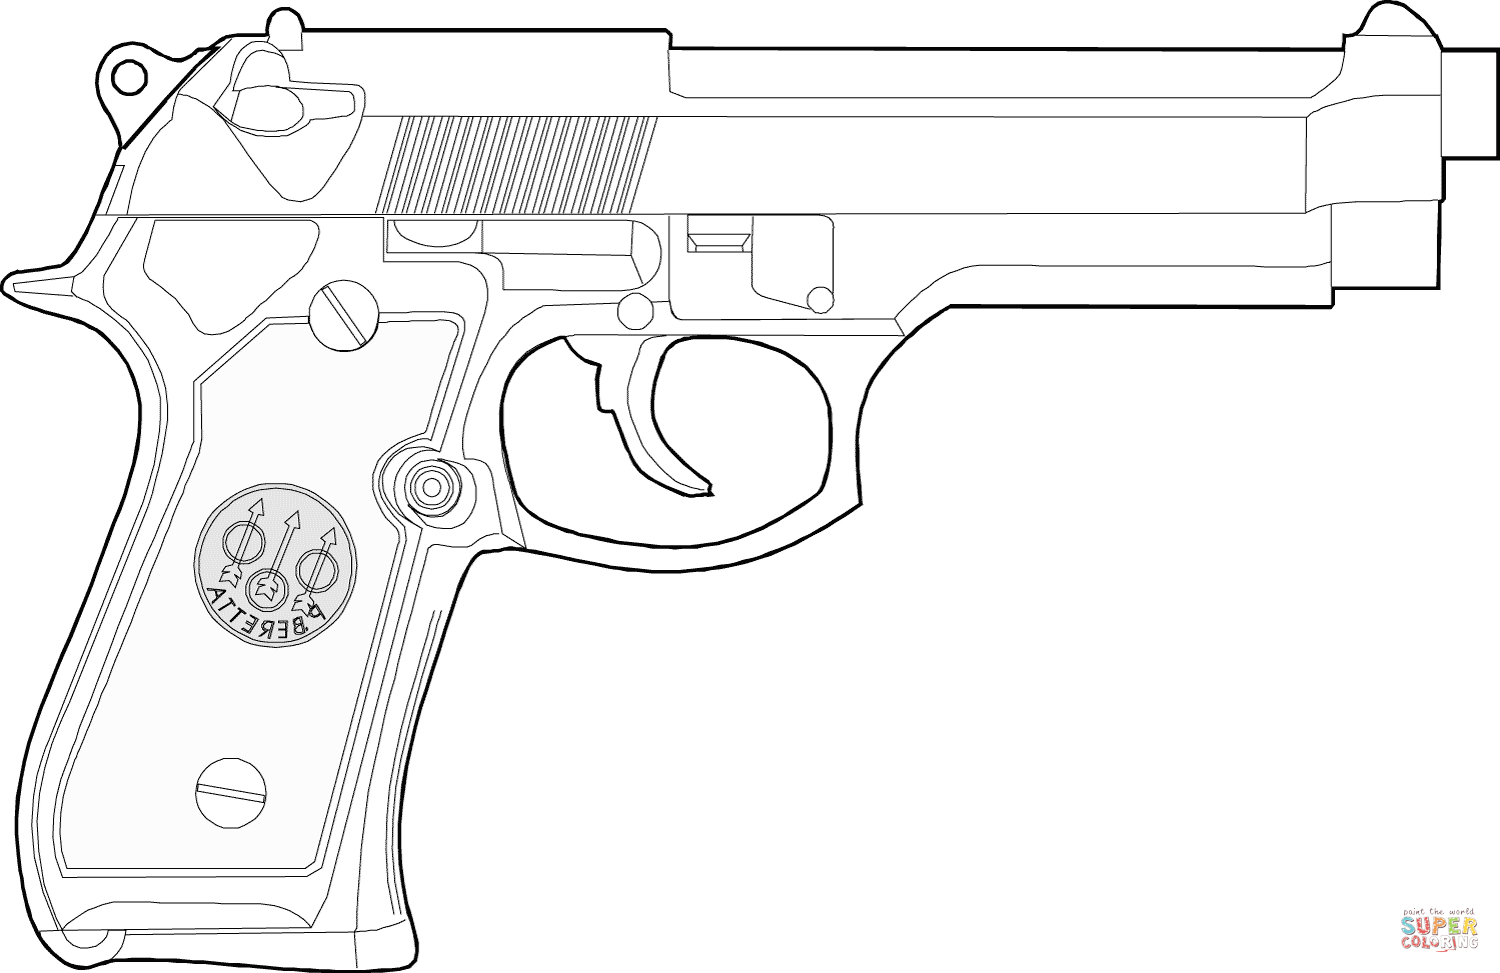 Handgun coloring, Download Handgun coloring for free 2019